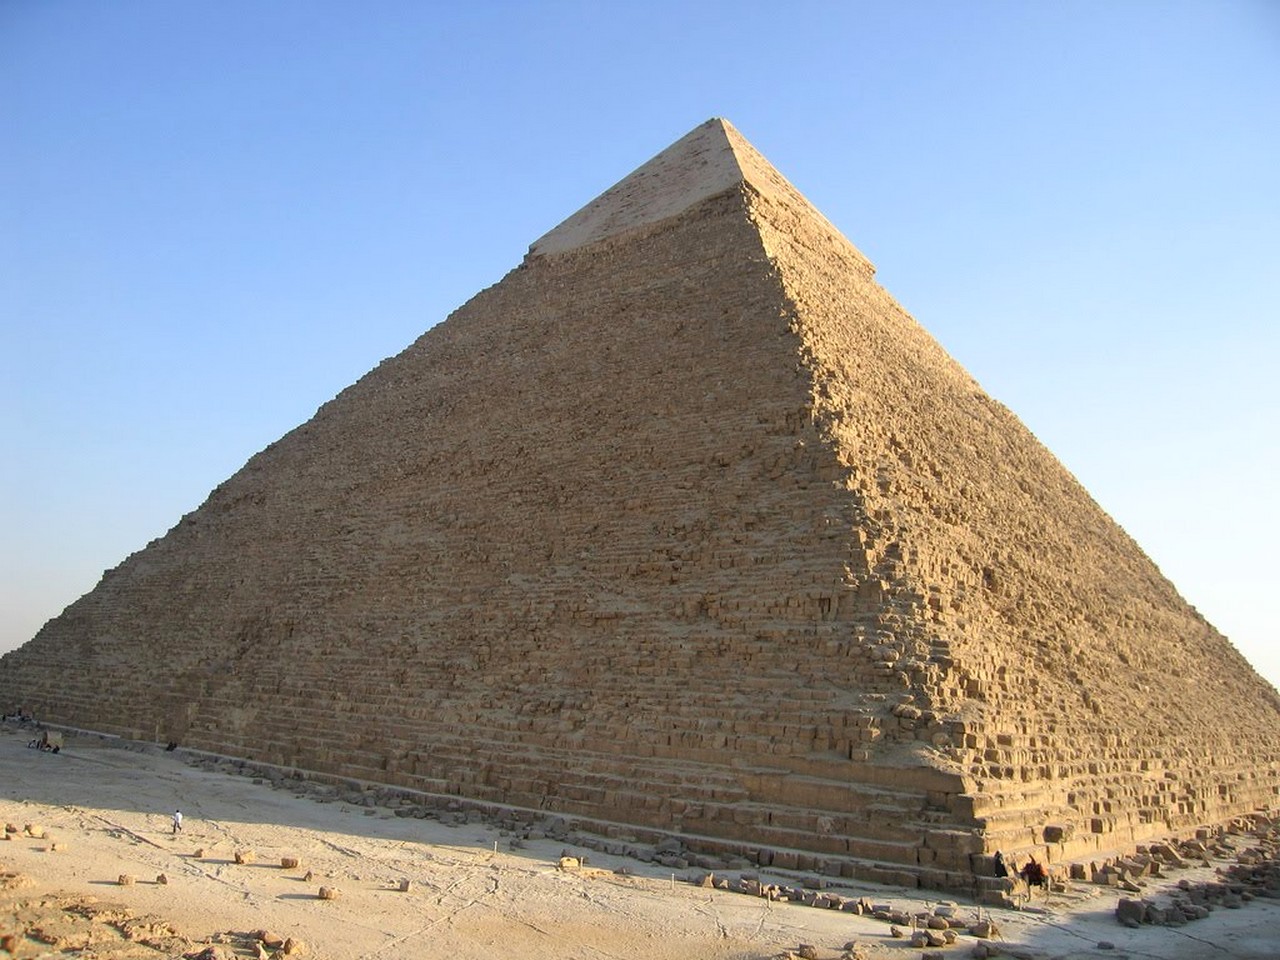 Imagen piramides de egipto